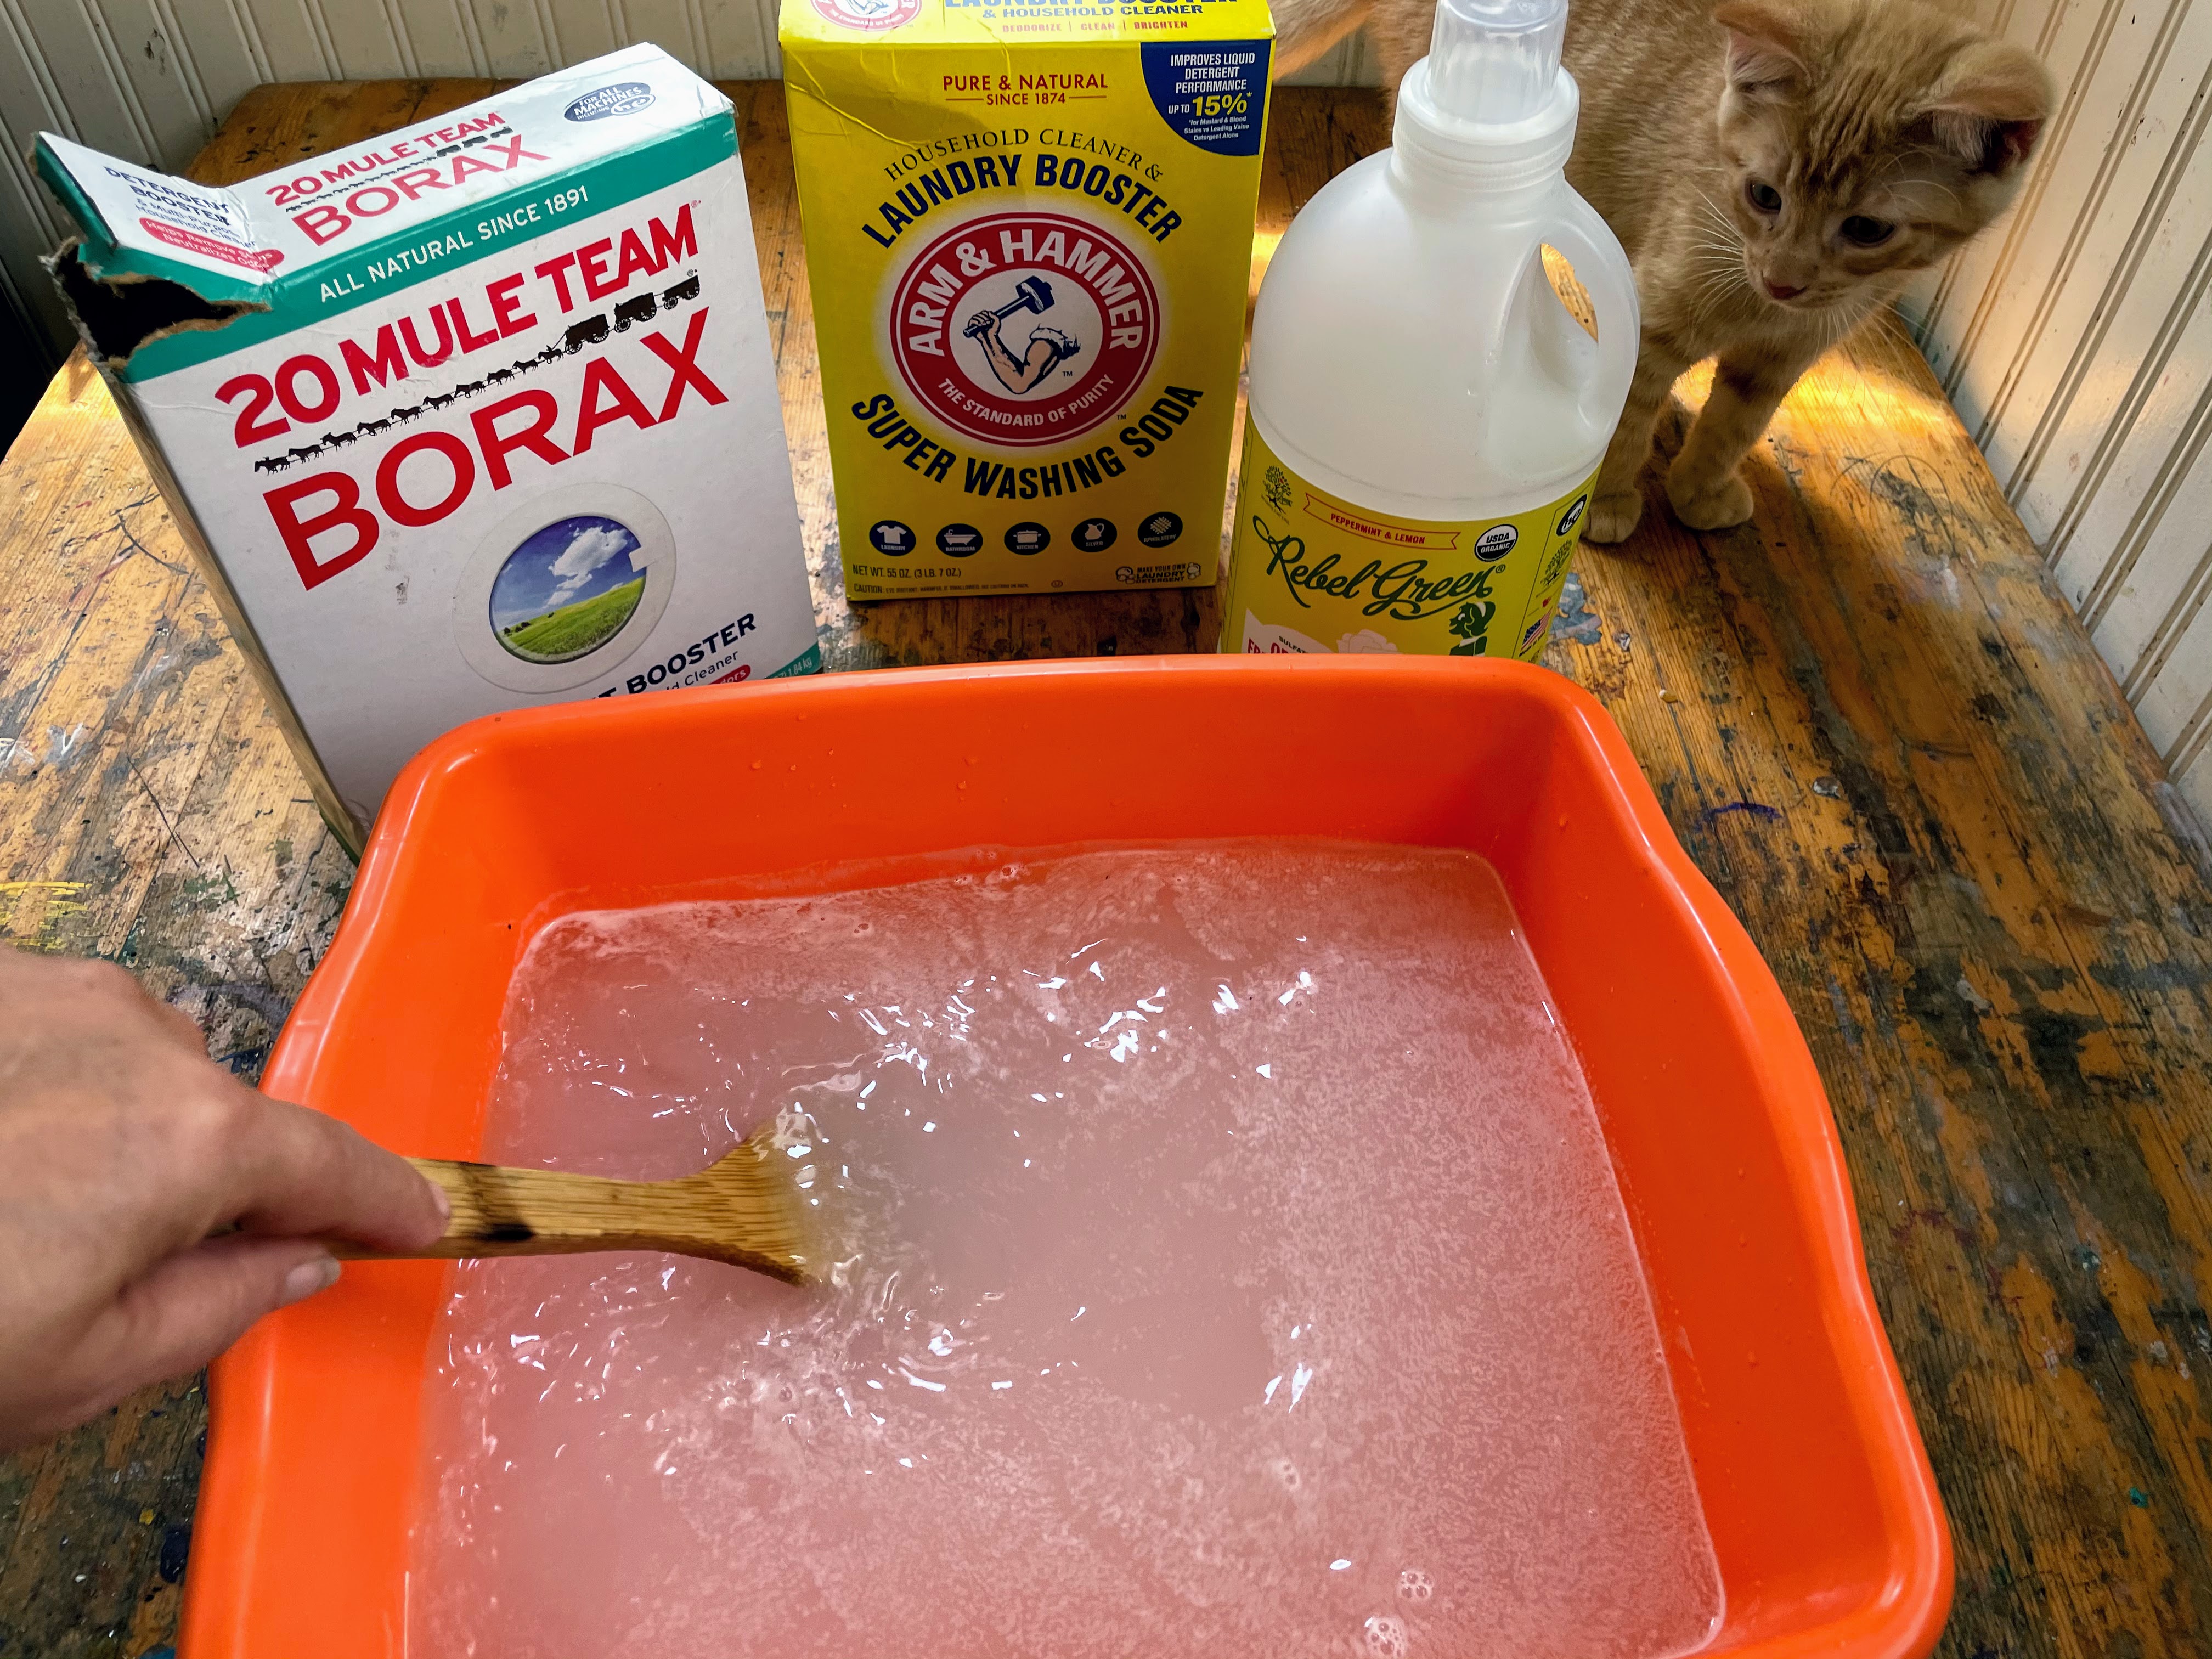  Pure Original Ingredients Borax Powder (1 Gallon